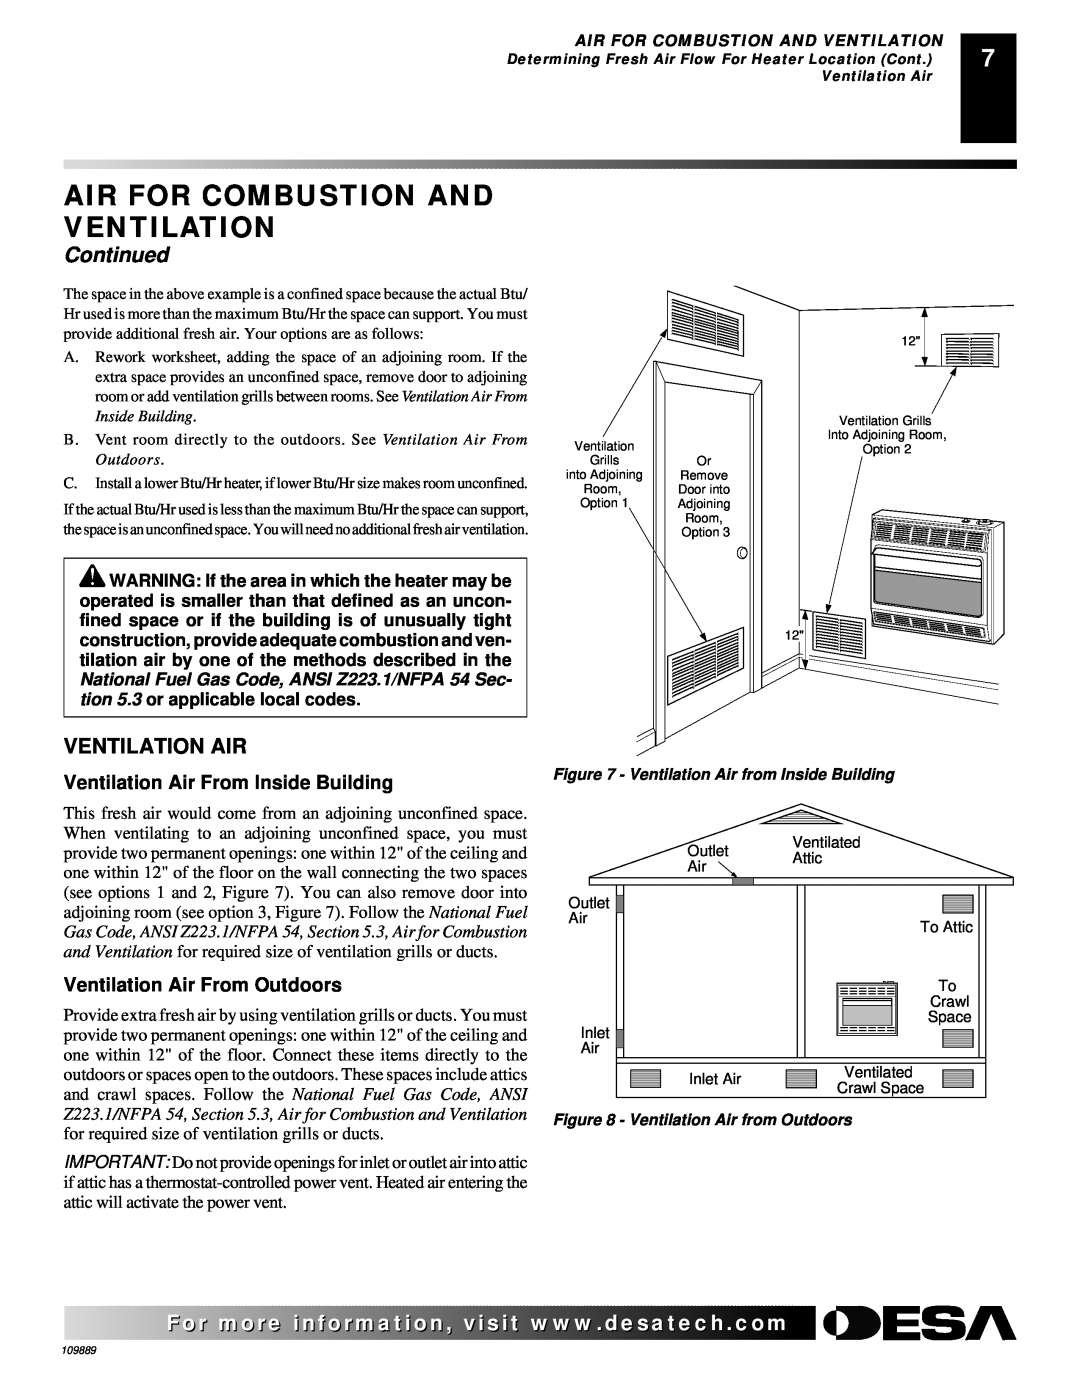 Desa VMH3000TPA installation manual Ventilation Air From Inside Building, Ventilation Air From Outdoors, Continued 